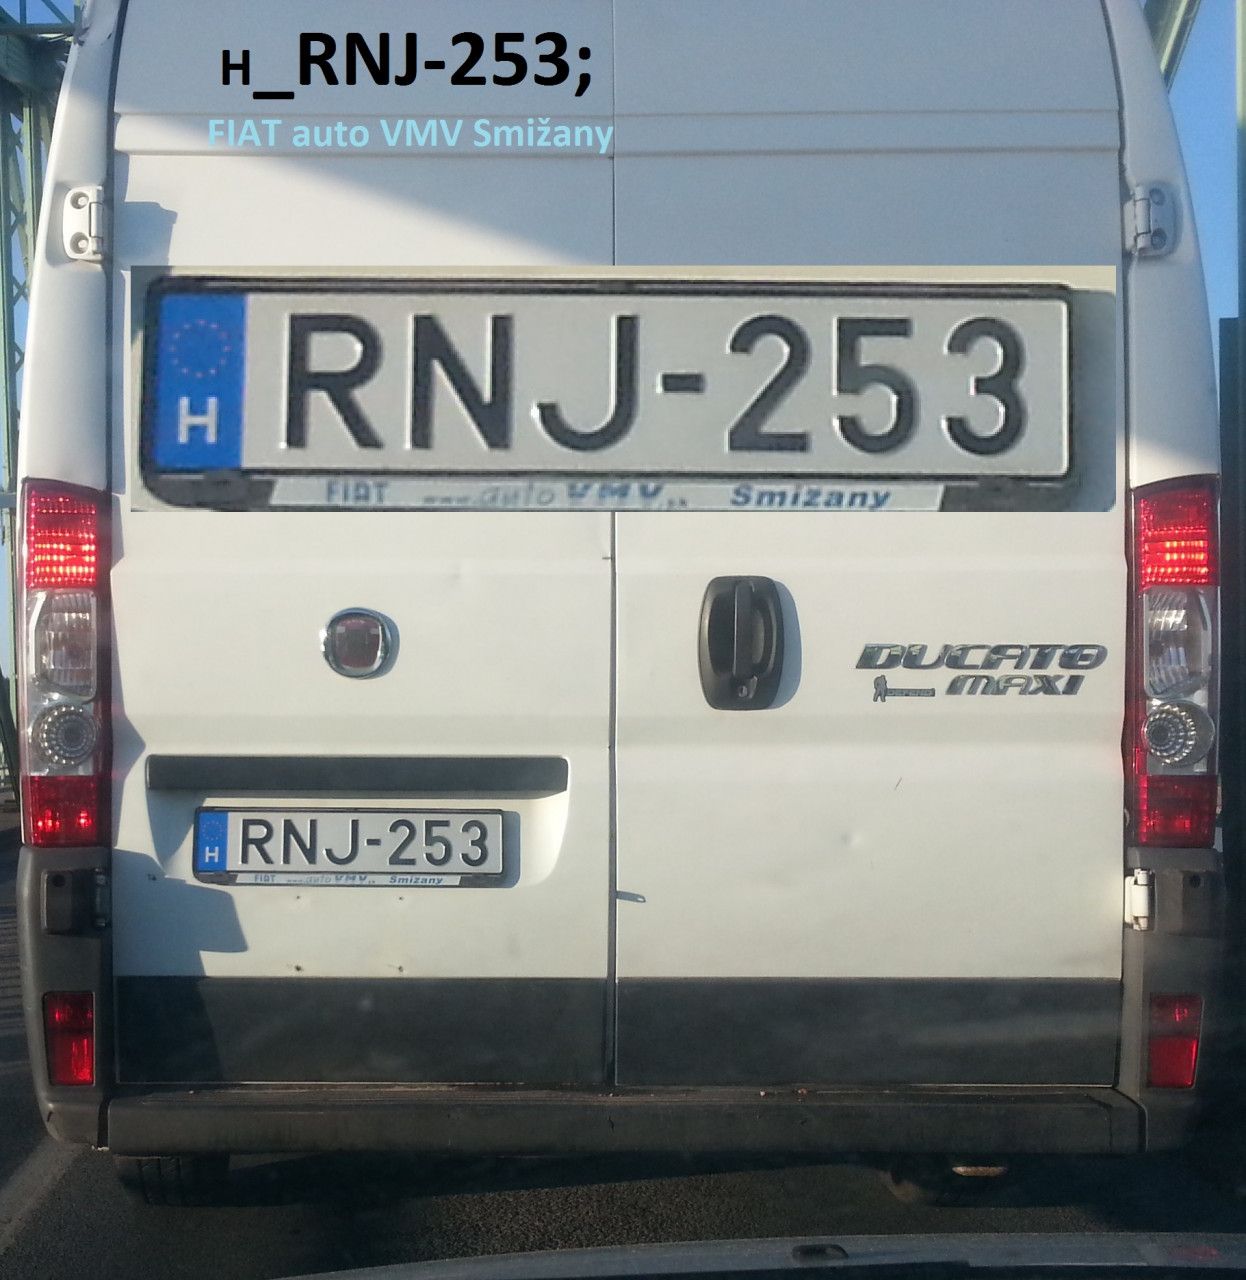  H_RNJ-253; FIAT auto VMV Smiany